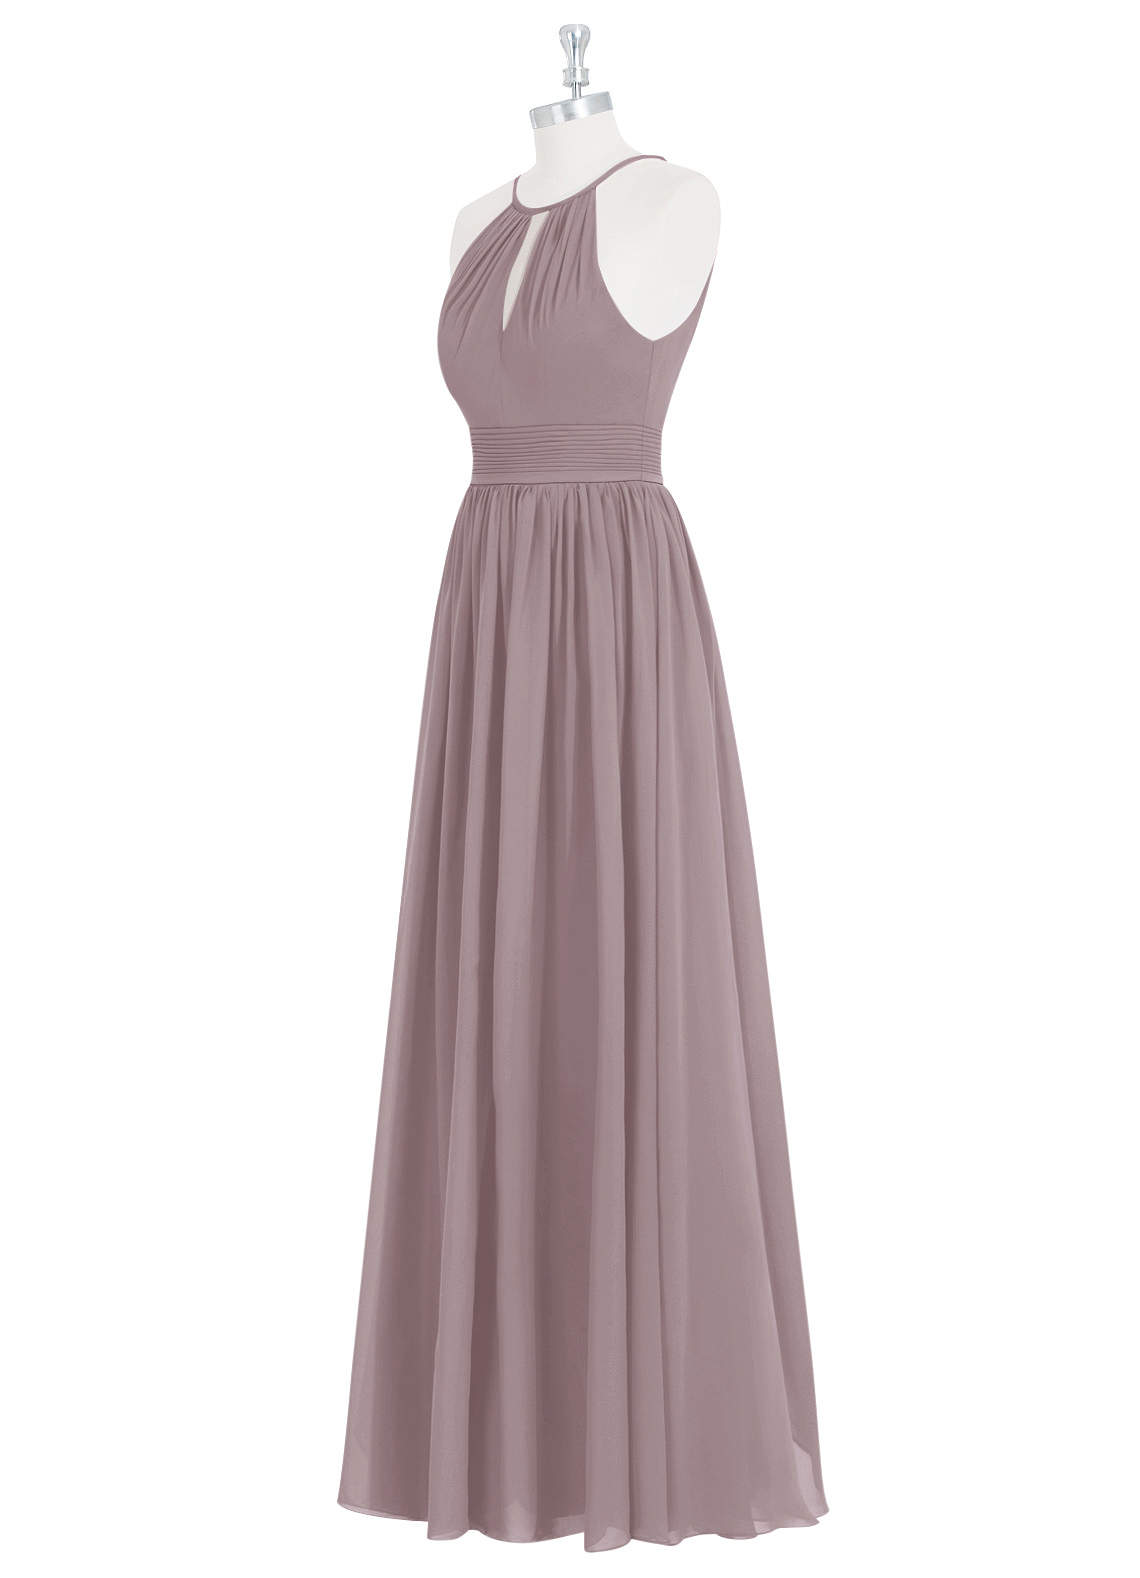 Azazie Cherish Bridesmaid Dresses A-Line Pleated Chiffon Floor-Length Dress image1